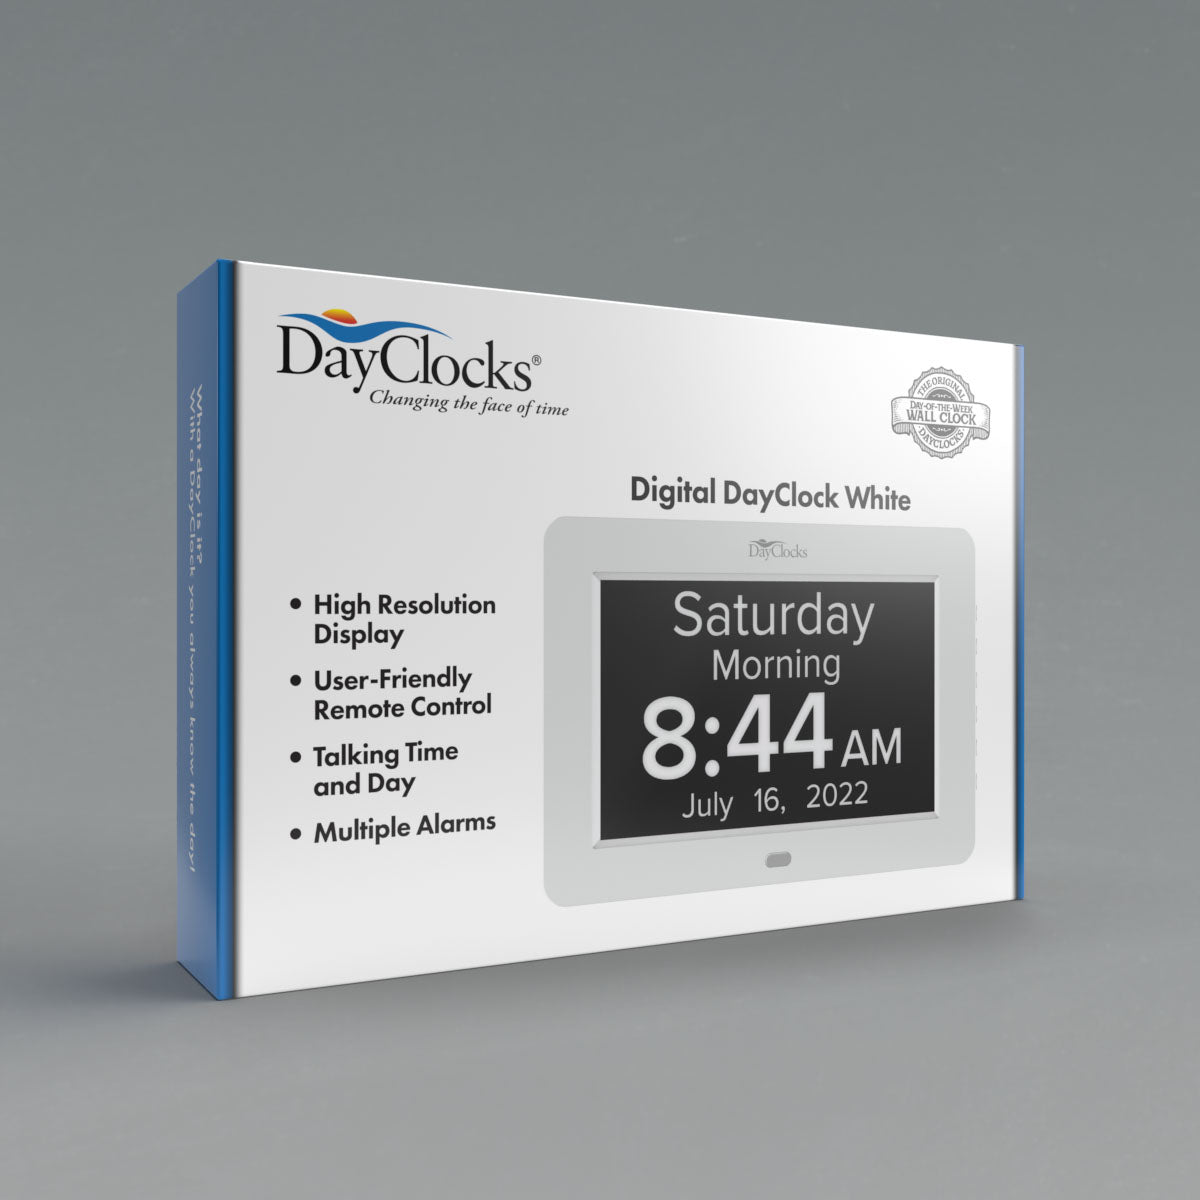 Digital DayClock by DayClocks® 8